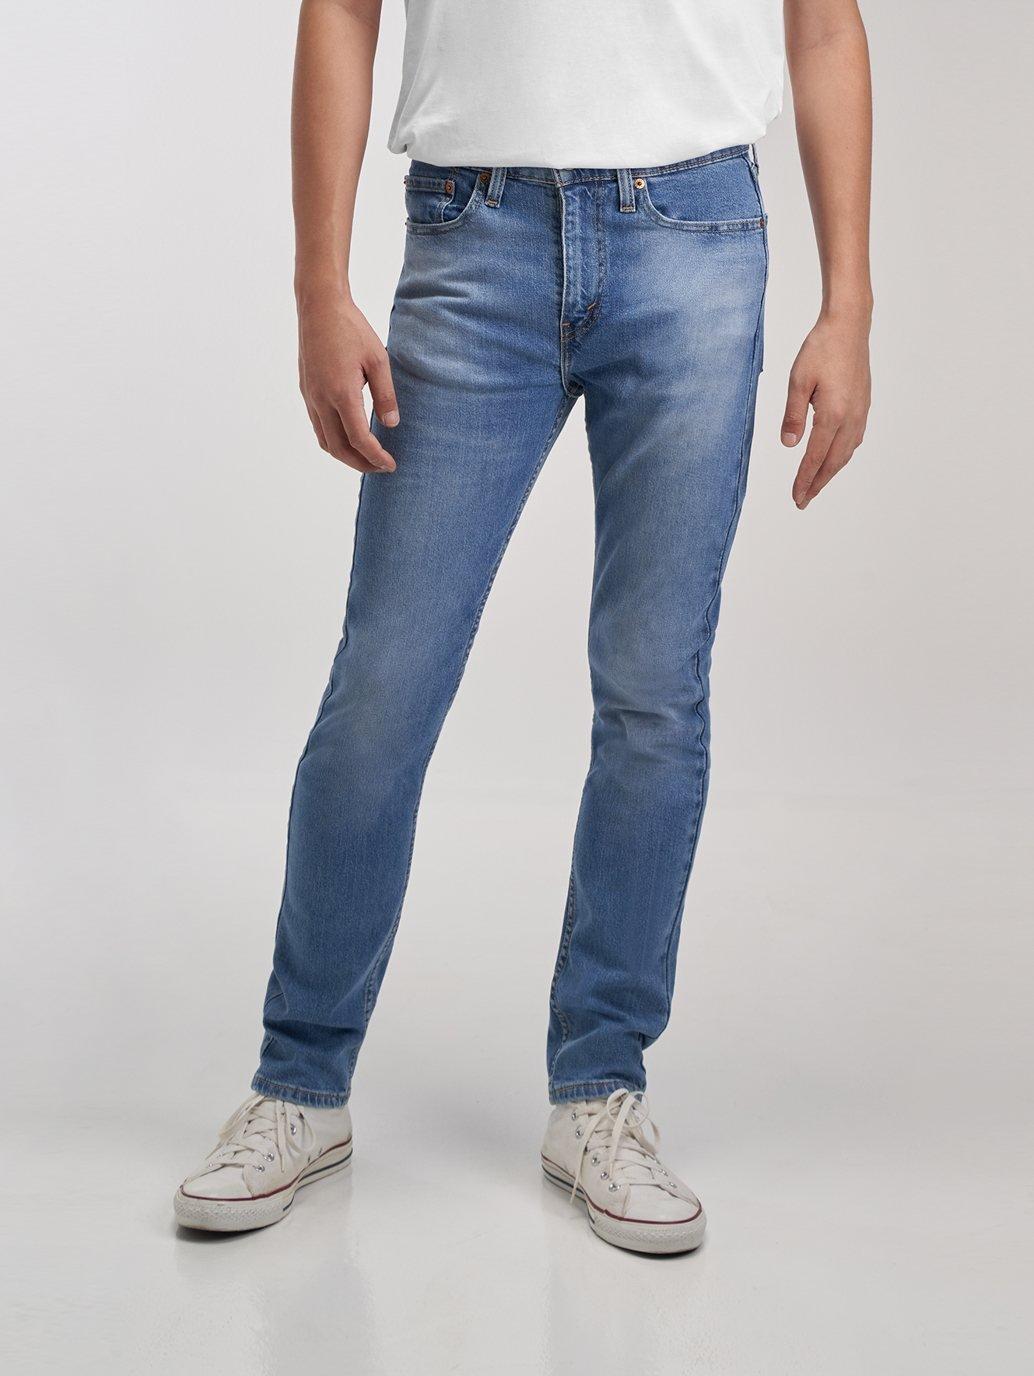 Buy Levi's® Men's 510™ Skinny Jeans | Levi's® Official Store